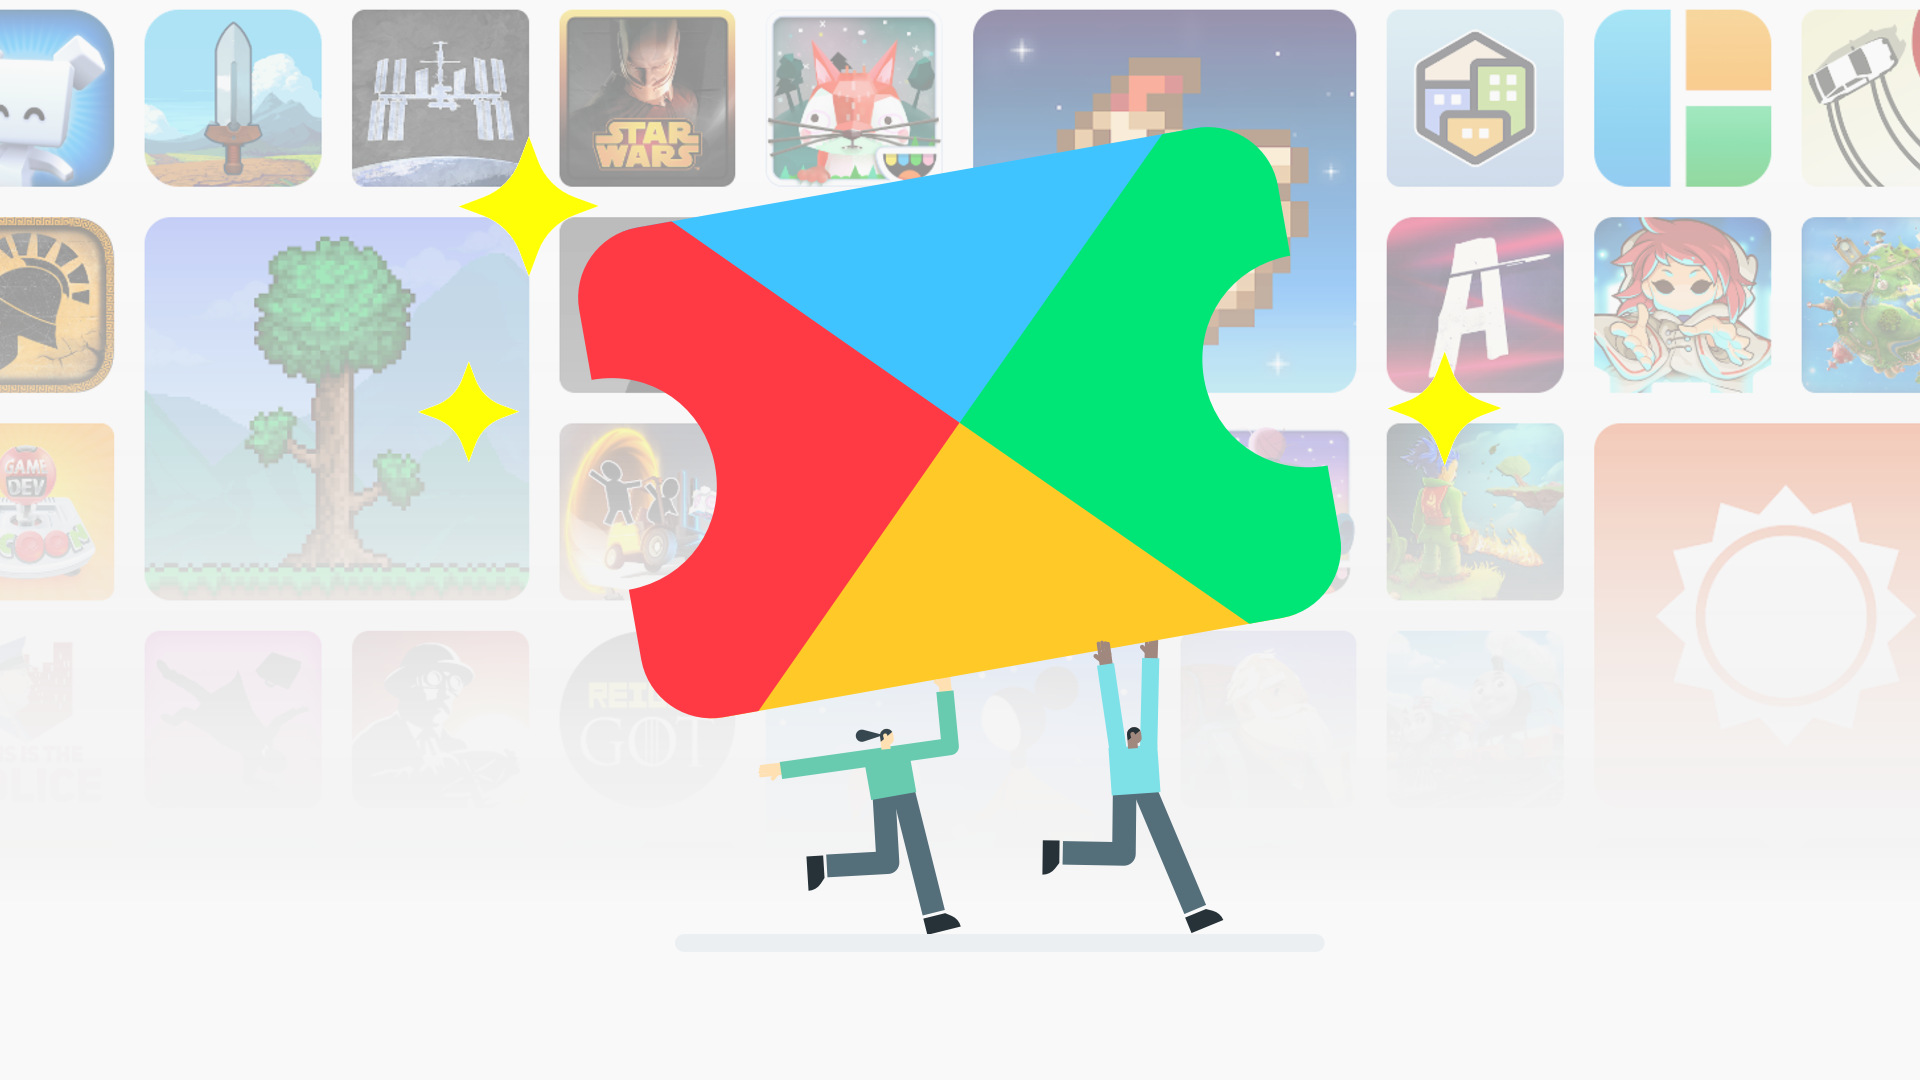 BEAT MP3 - Rhythm Game - Apps on Google Play